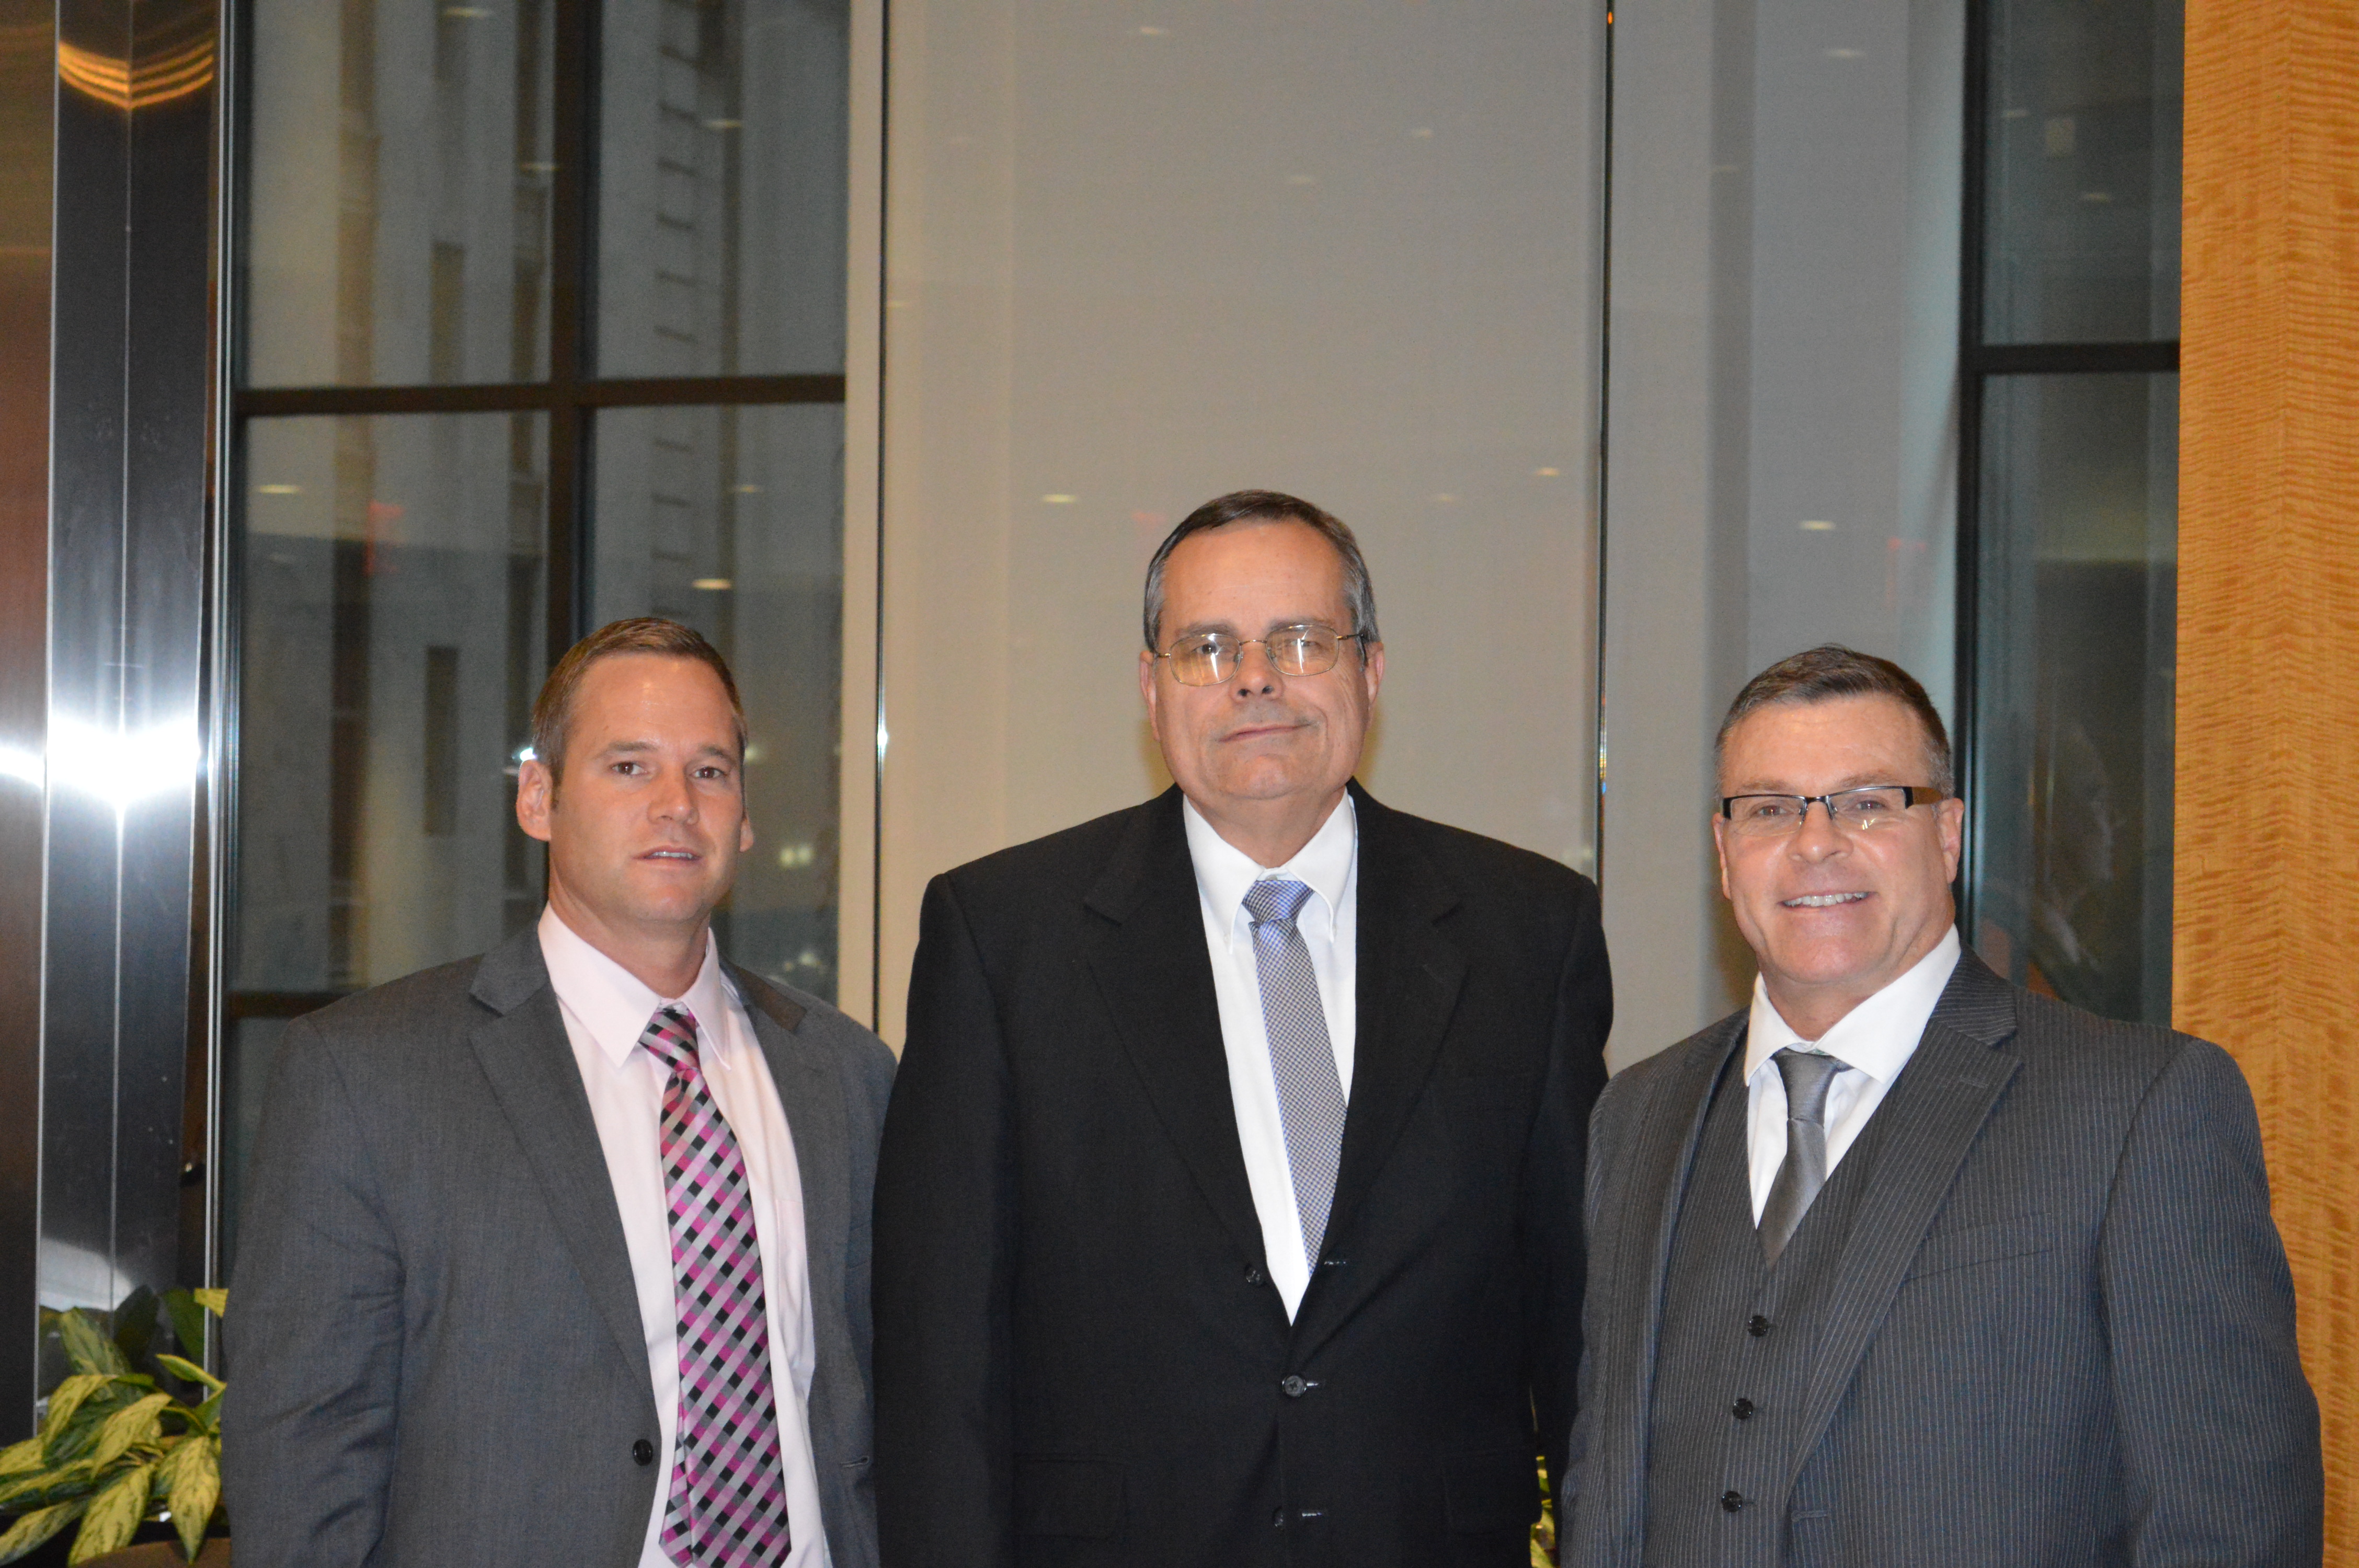 TD Bank 2 Wall St. NYC - Nick Peters, David Stewart and Robert Nash of Nash Holdings, Inc.